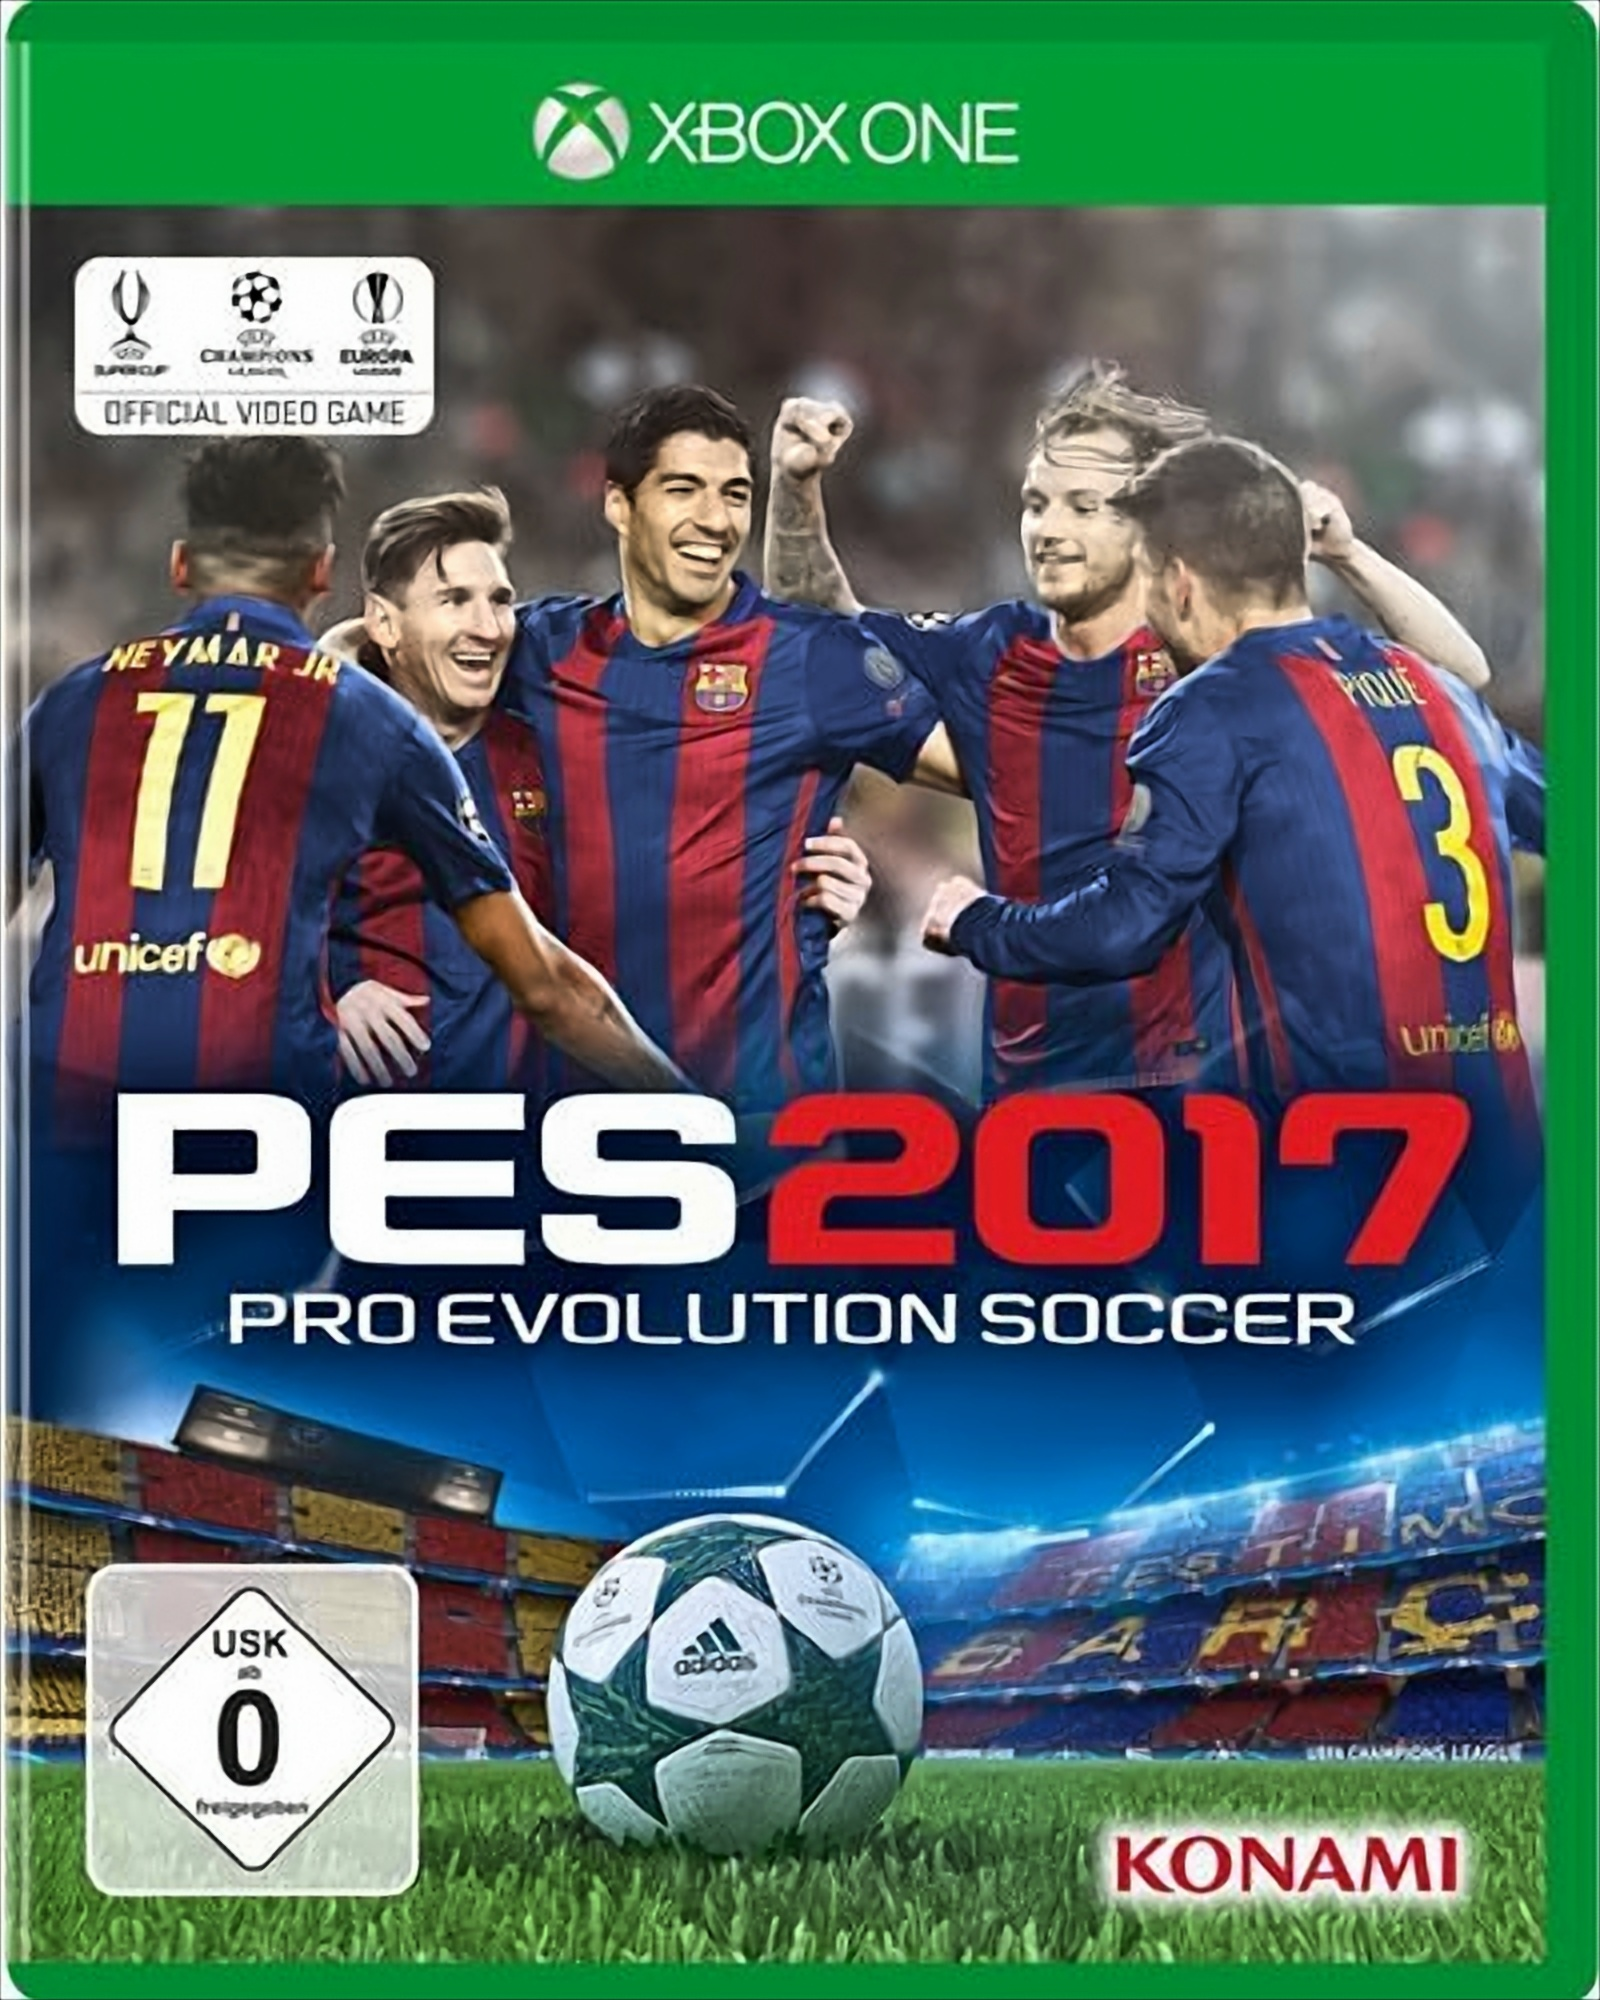 Pro 2017 Soccer - One] Evolution [Xbox